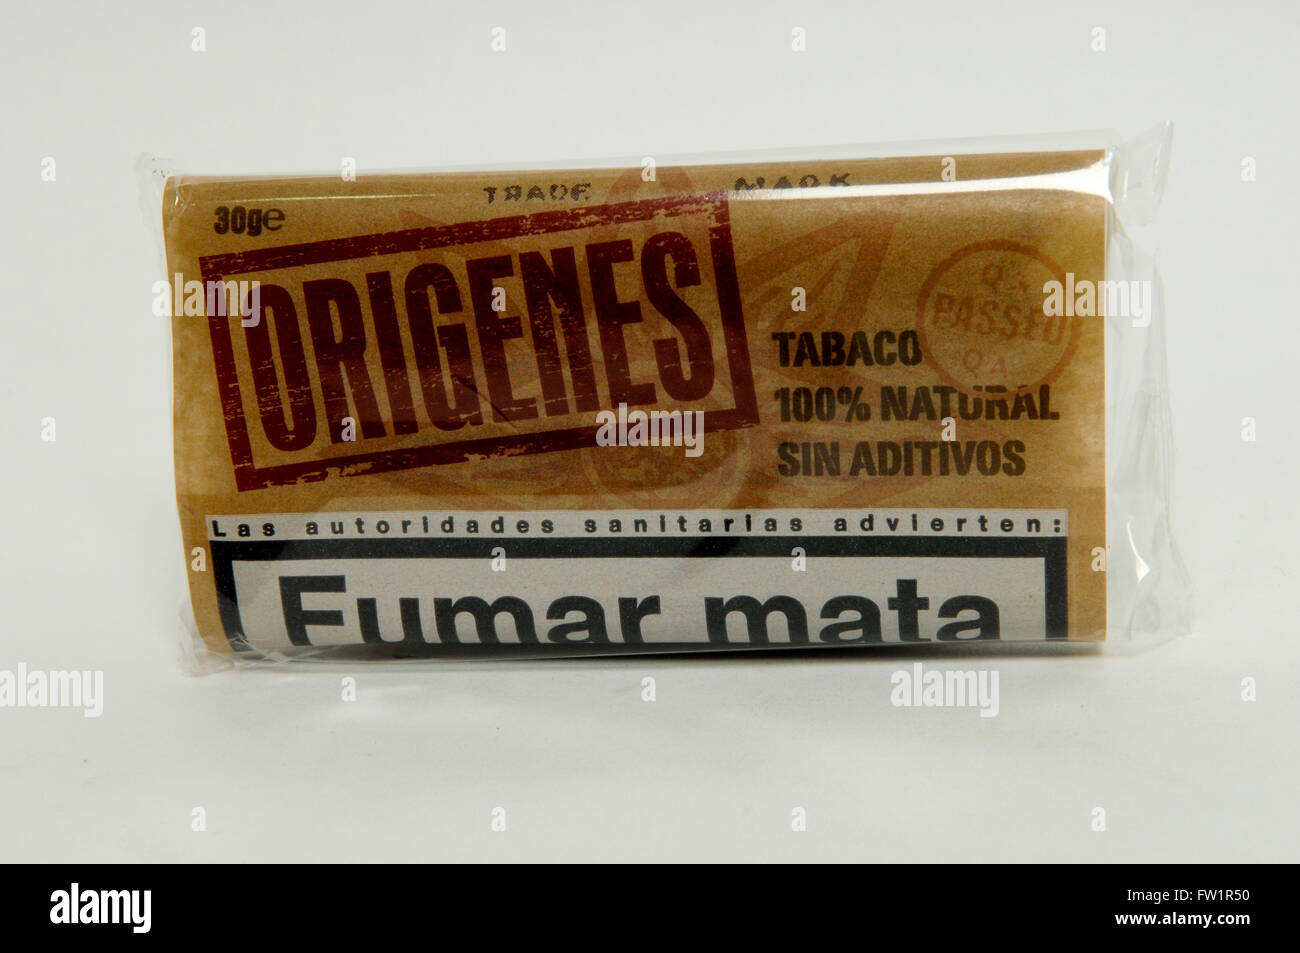 Origenes 100% Natural Hand Rolling Tobacco Stock Photo